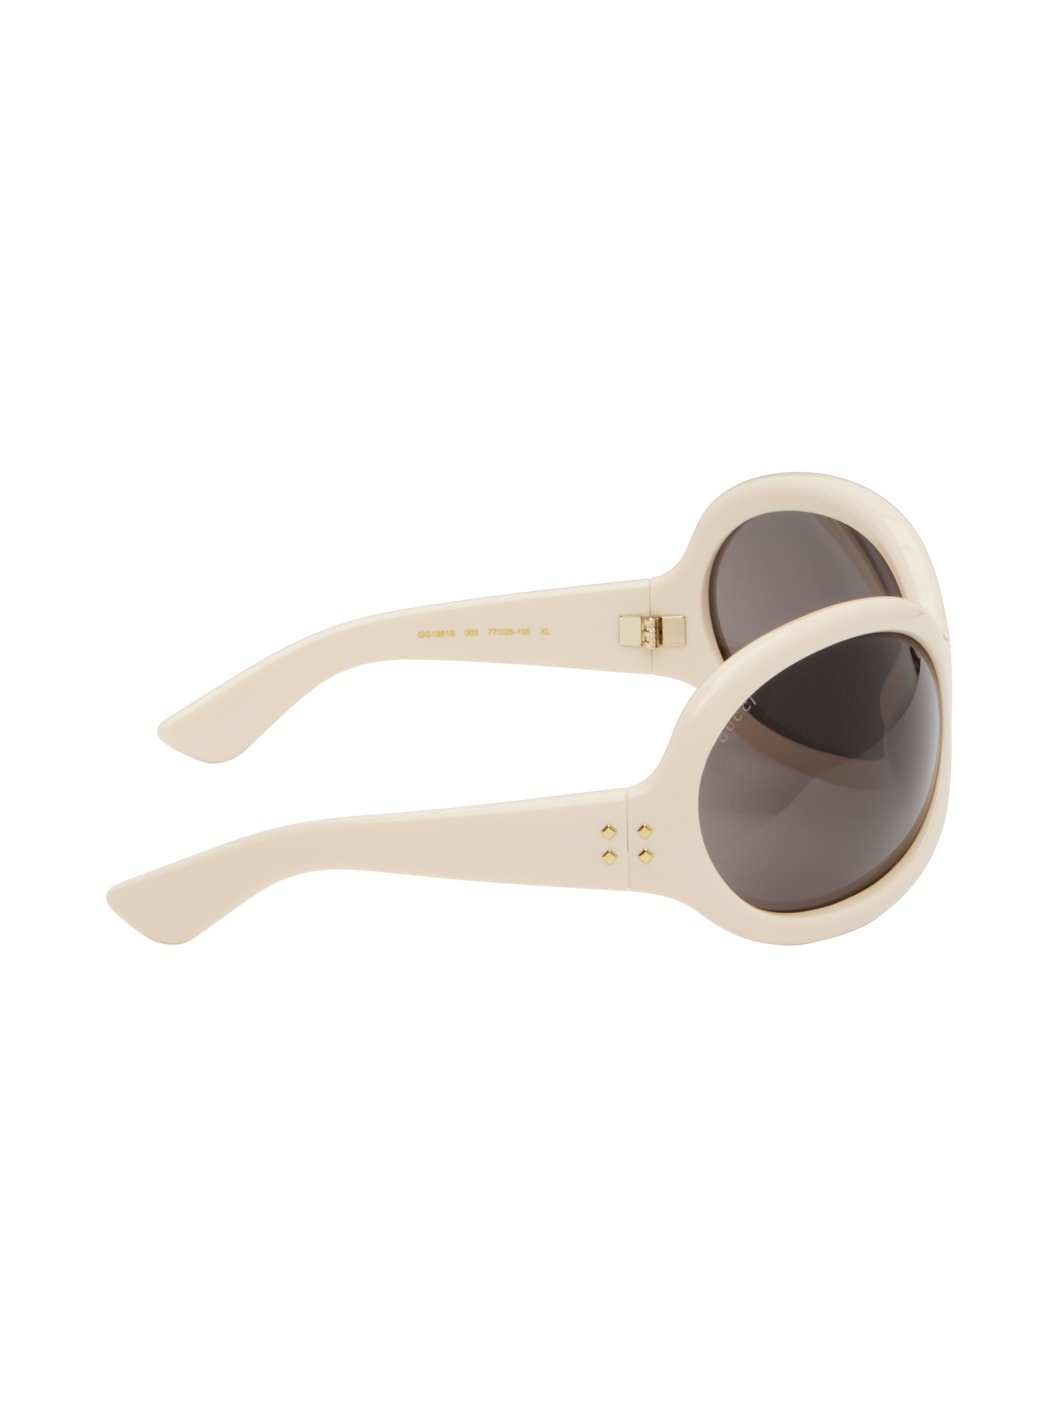 Off-White Oval Sunglasses - 2